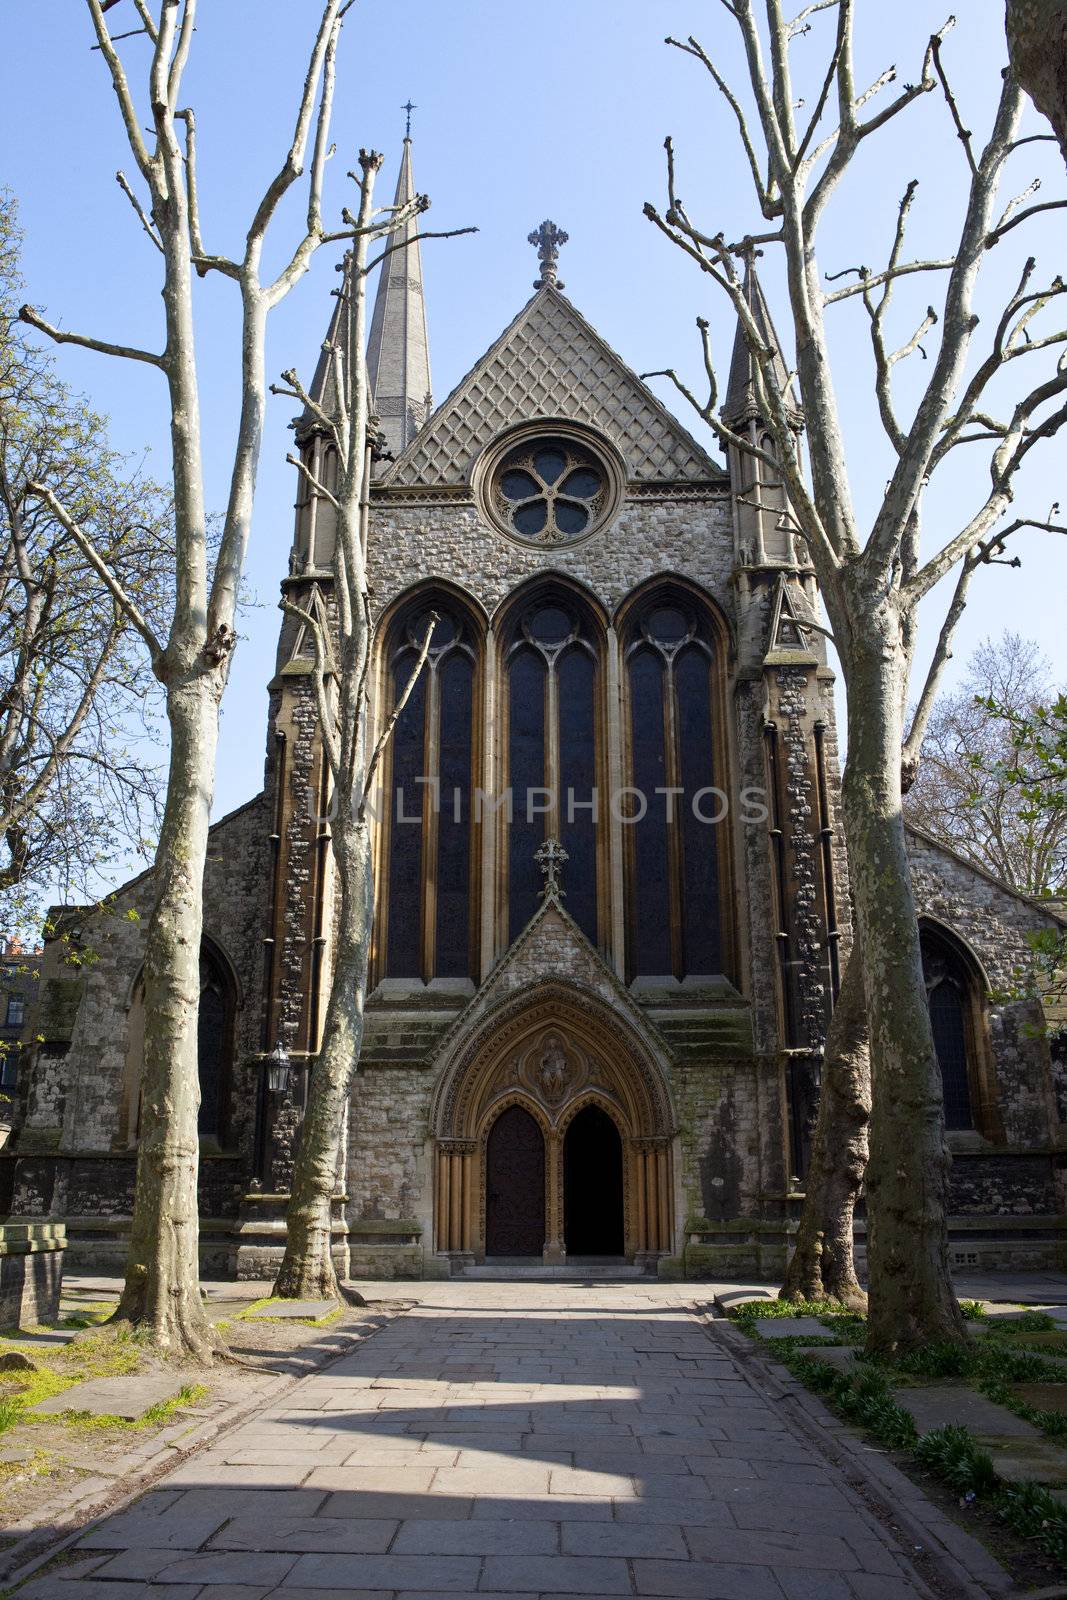 St Mary Abbots Church in Kensington, London.